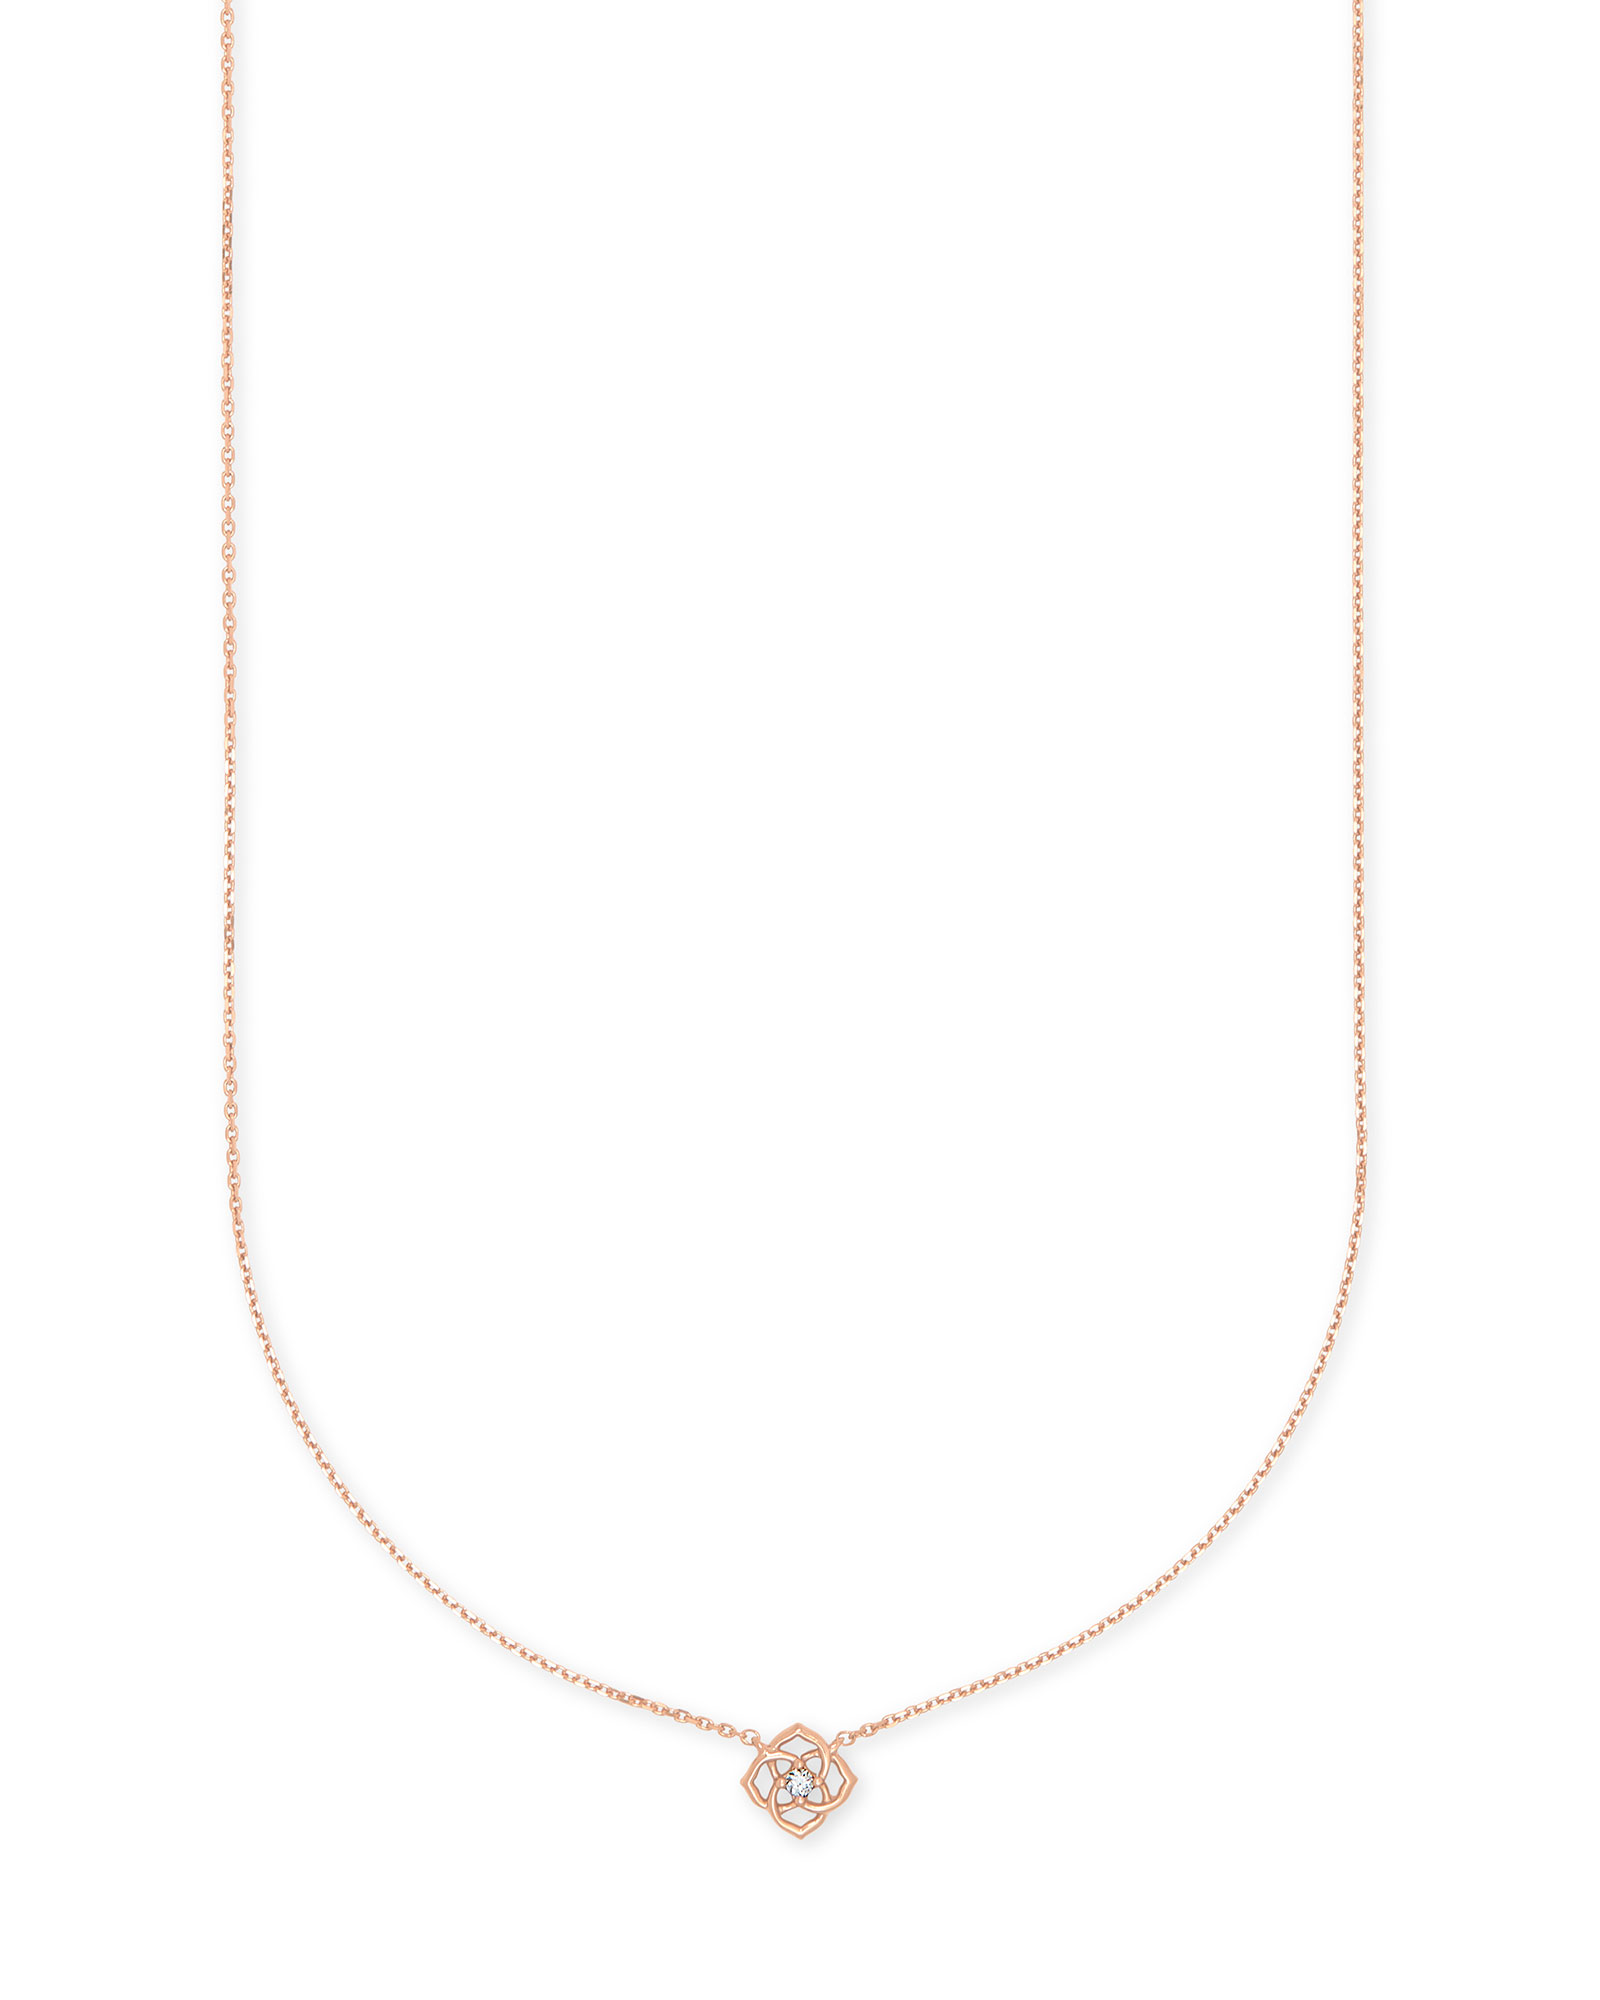 Fleur 14k White Gold Pendant Necklace in White Diamond | Kendra Scott